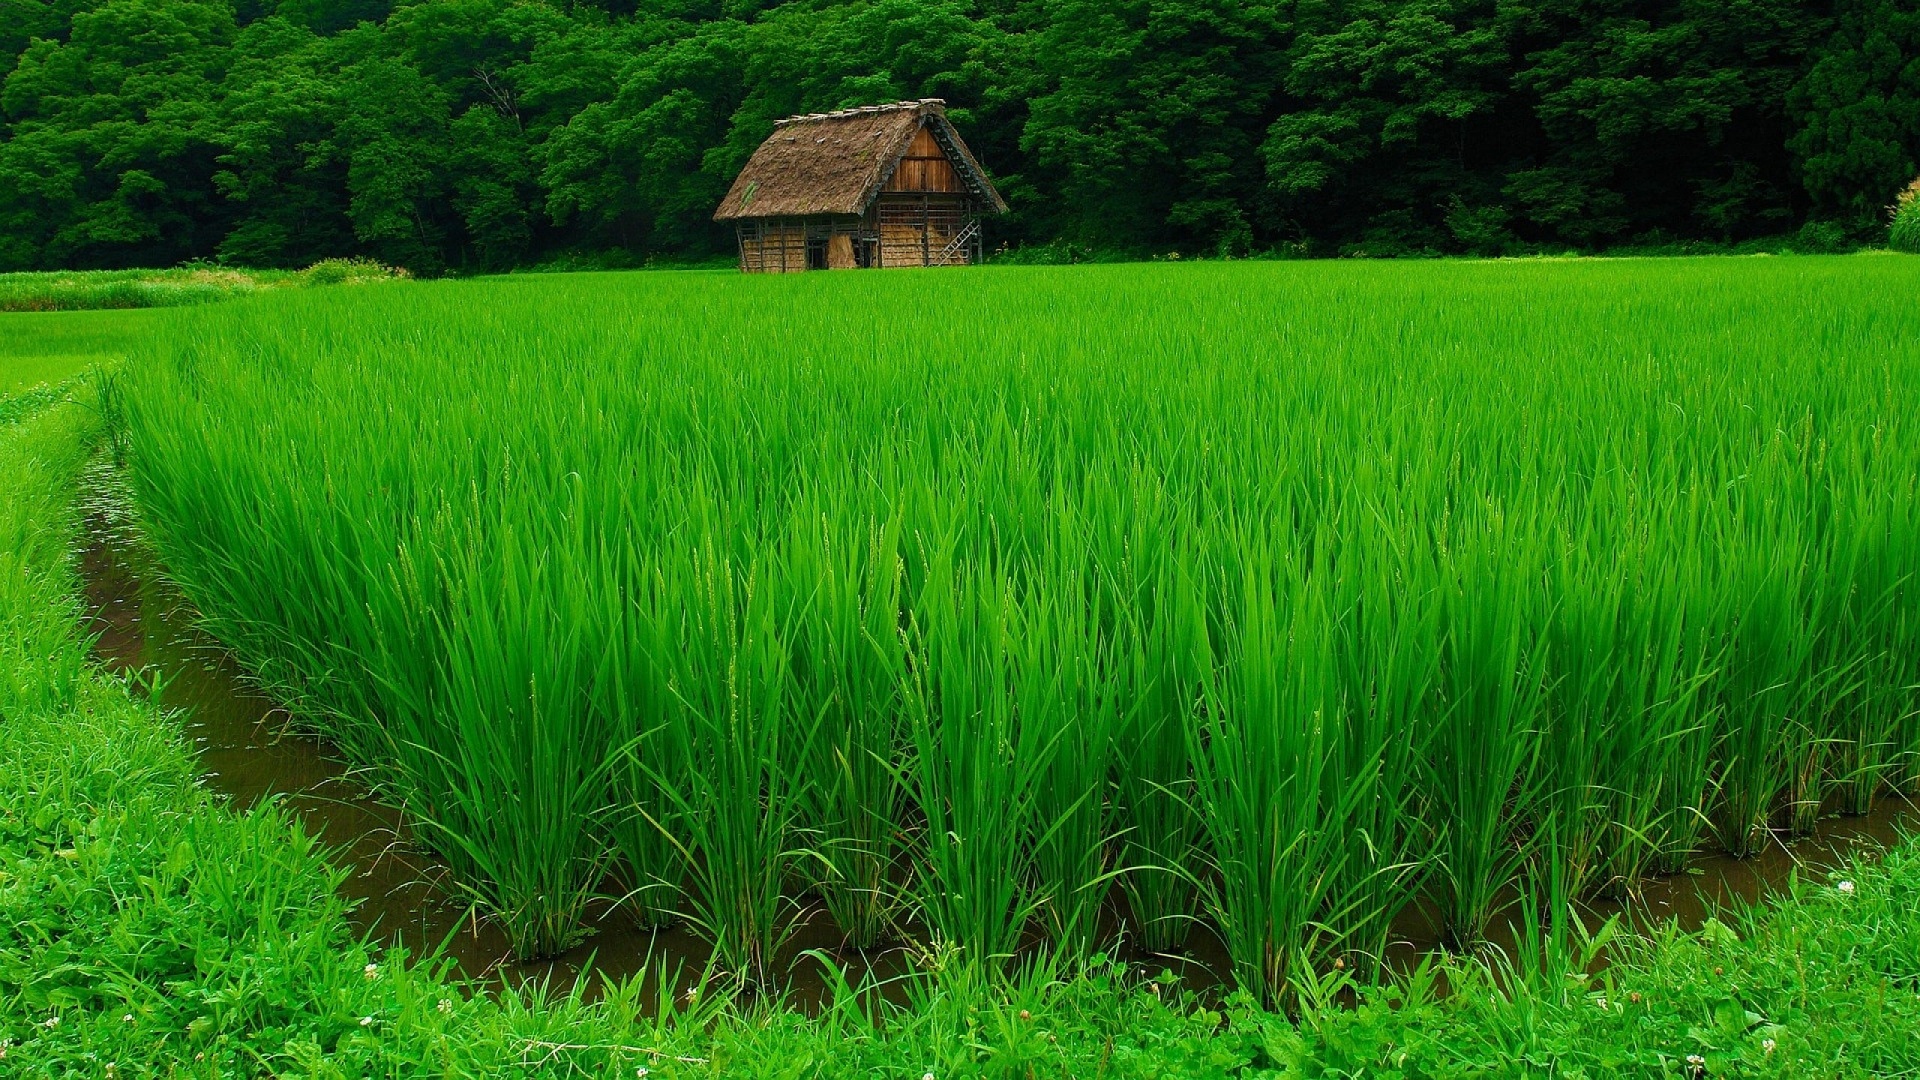 bosque verde fondo de pantalla hd,verde,césped,campo de arroz,campo,paisaje natural